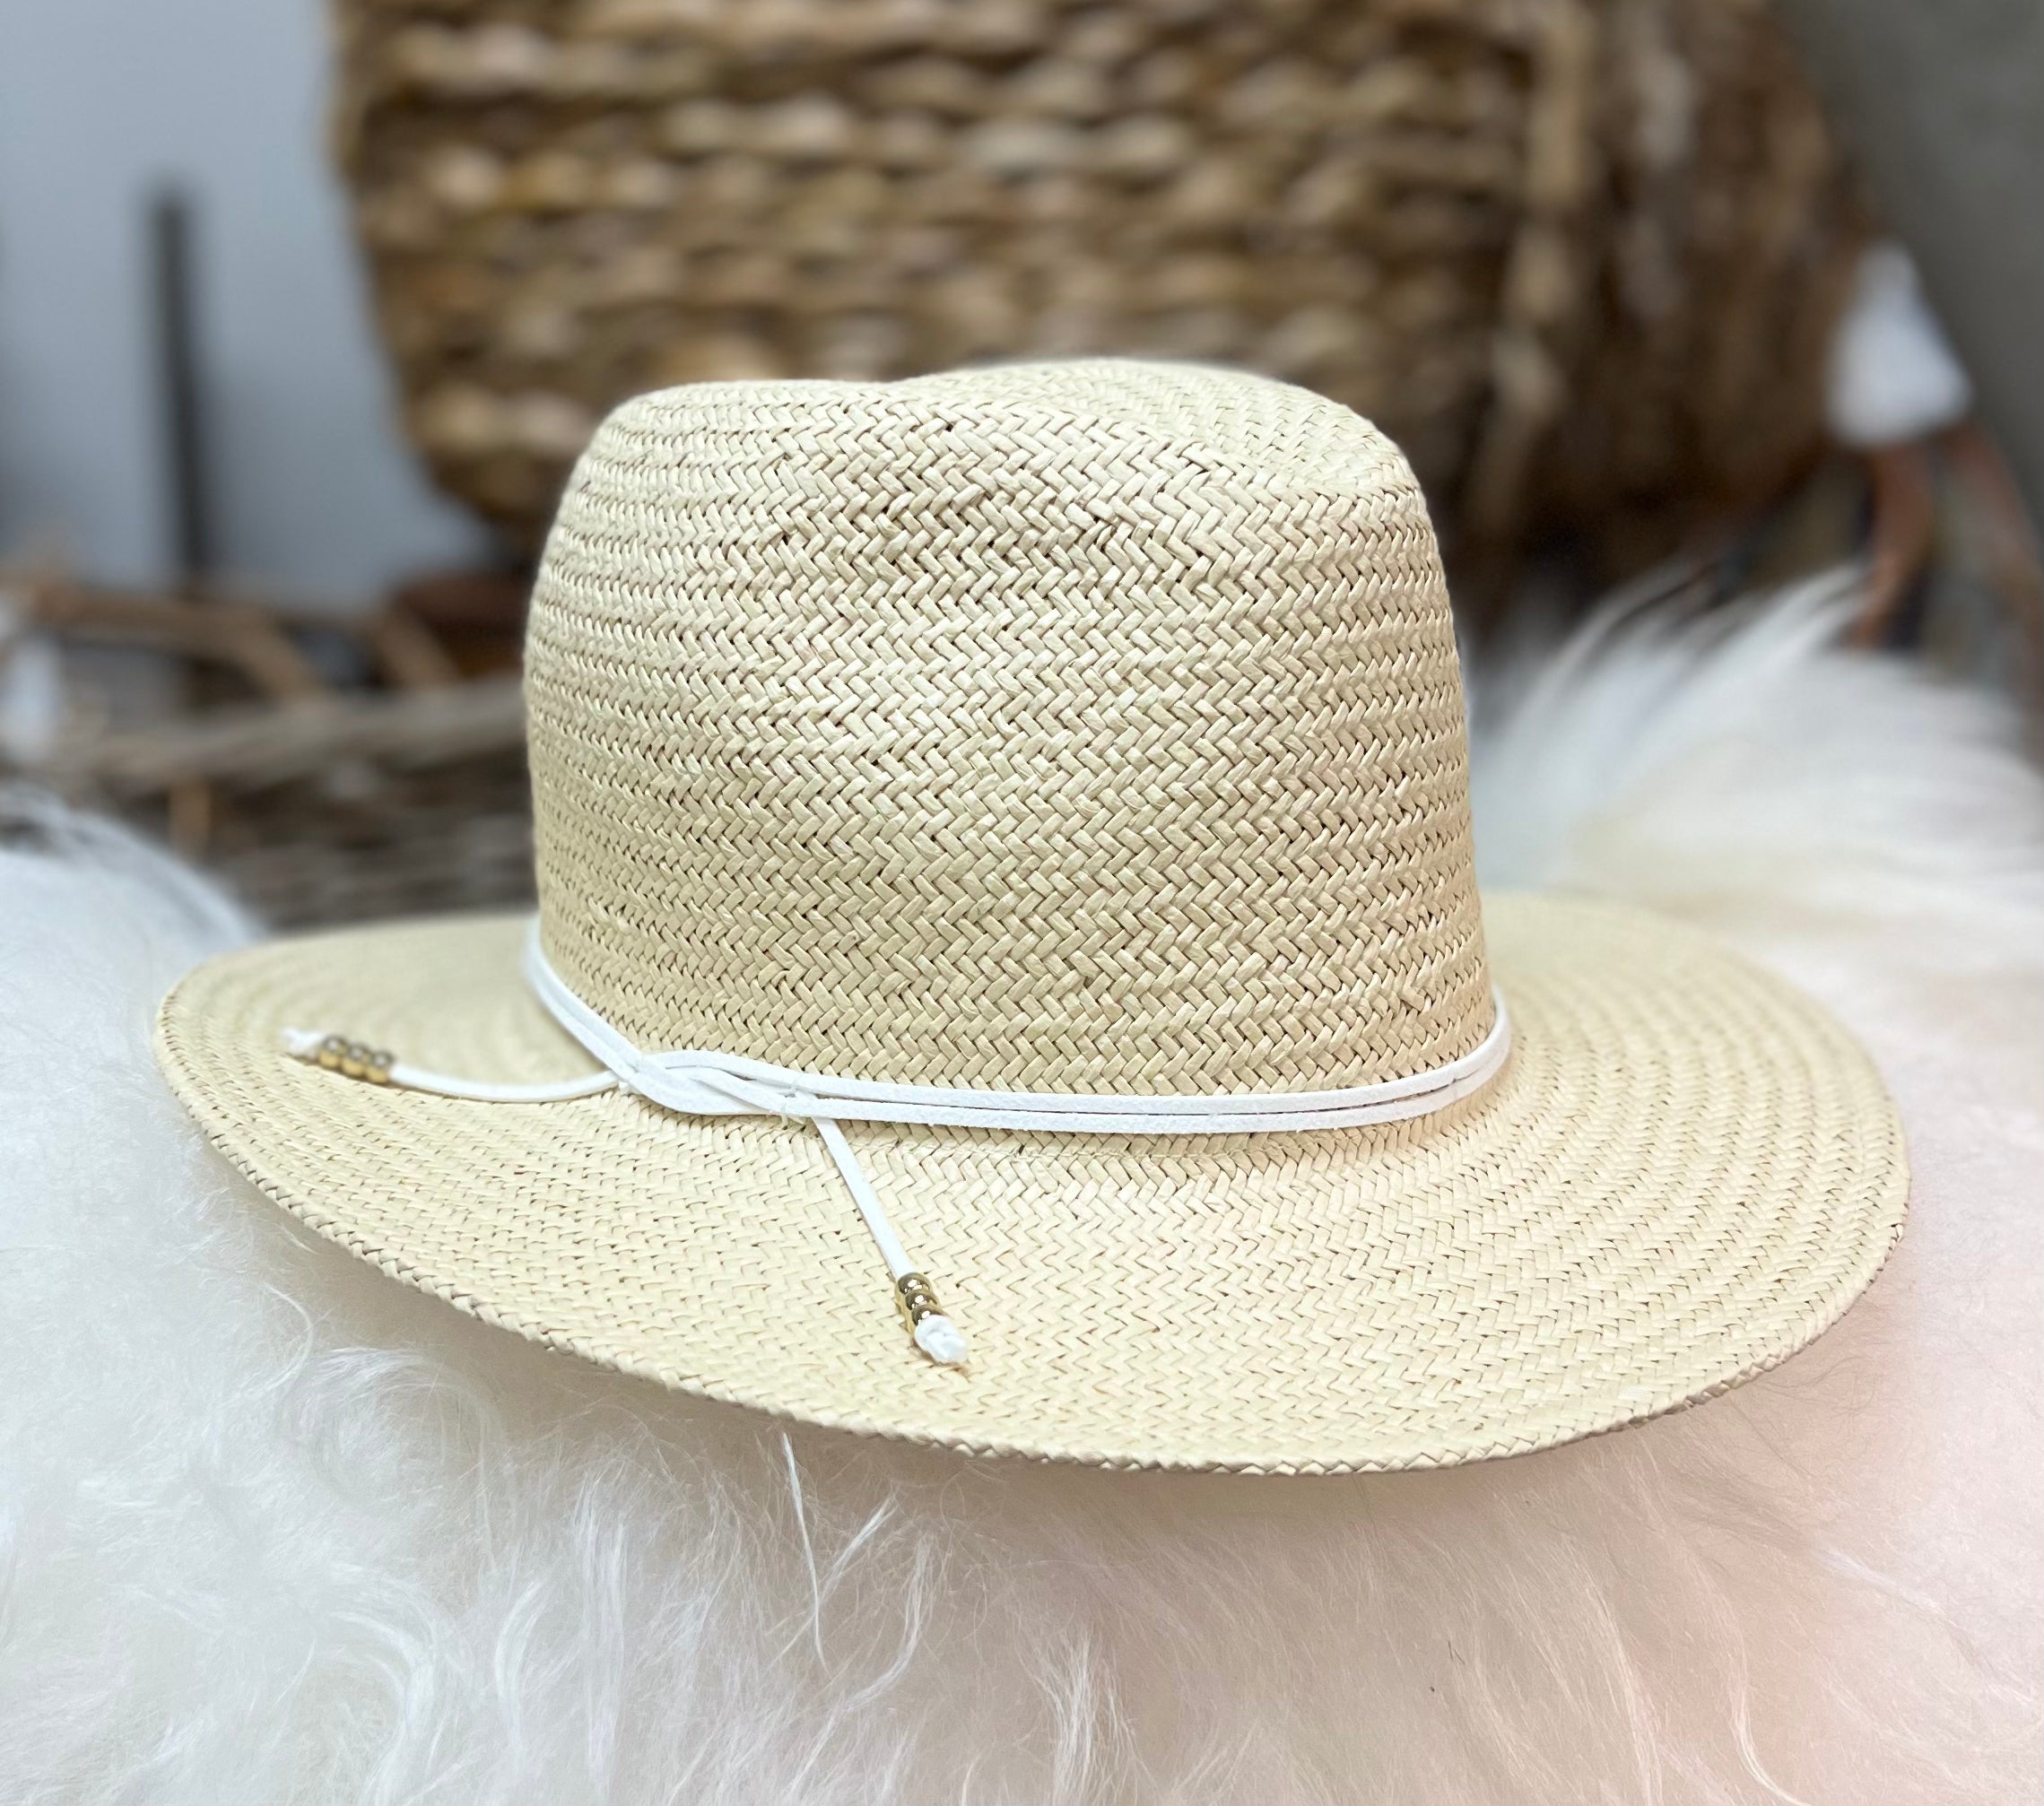 AG's Favorite Summer Hats!